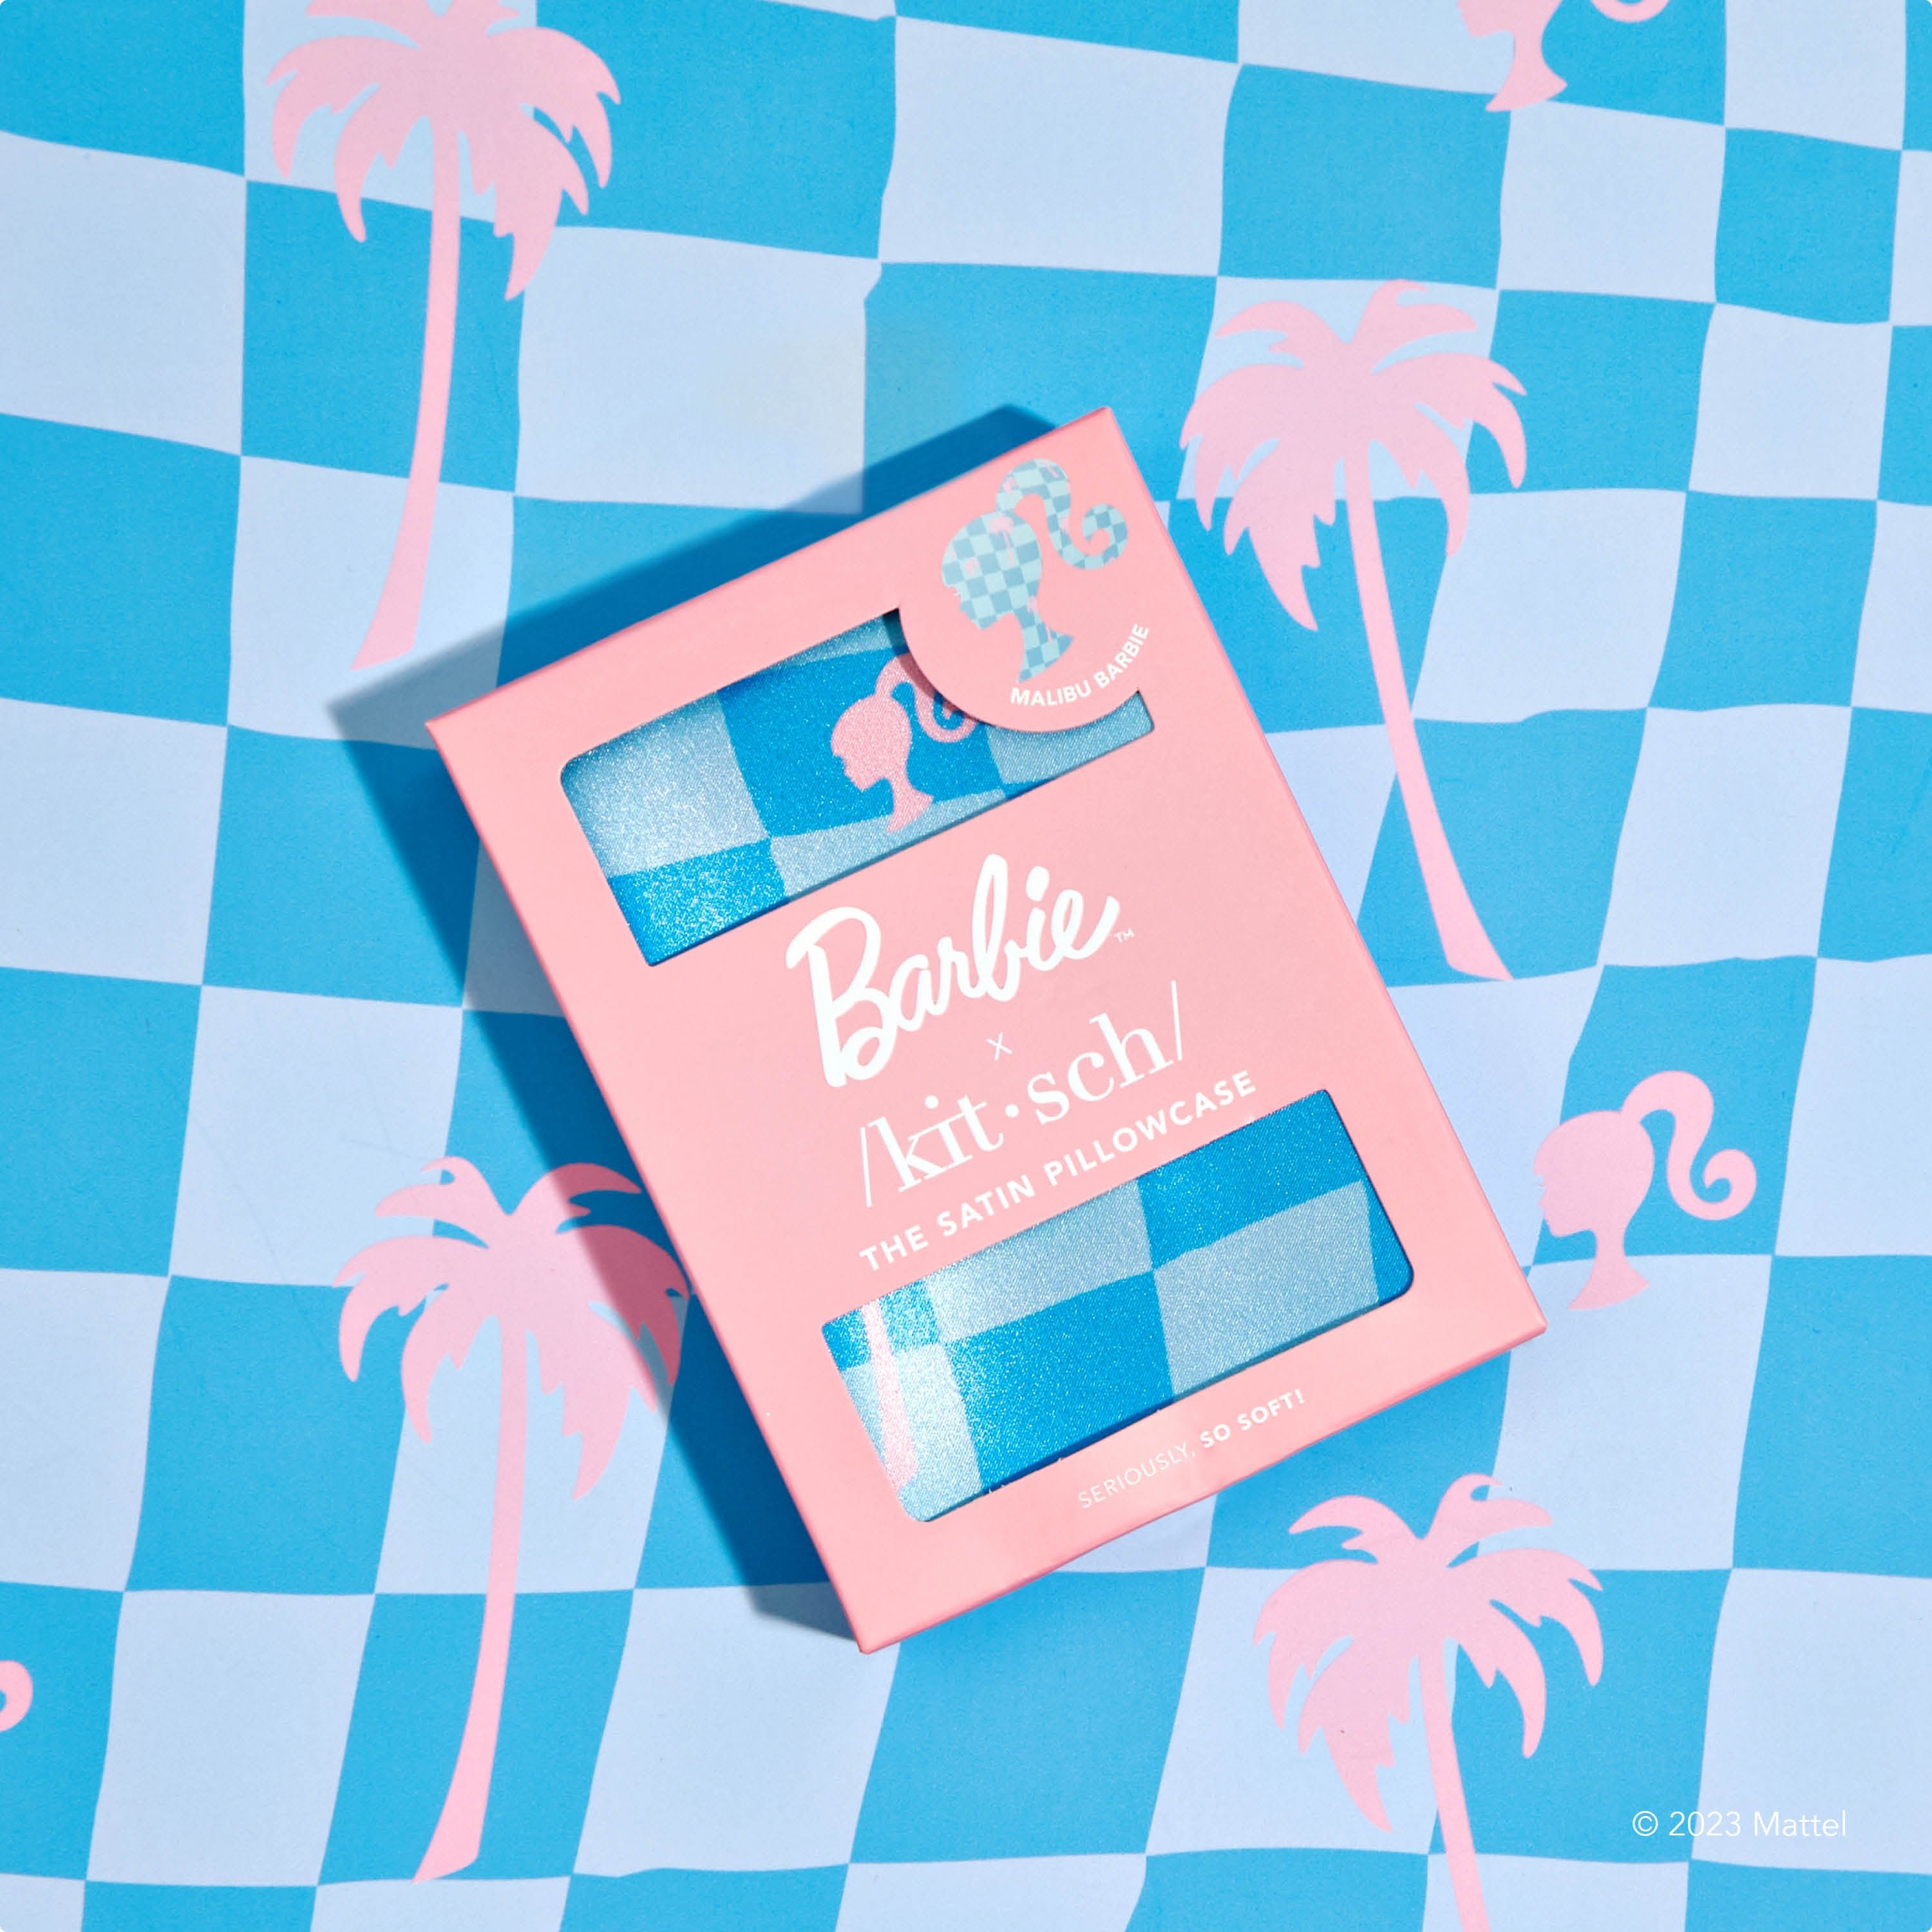 Barbie x Kitsch King Pillowcase - Malibu Barbie